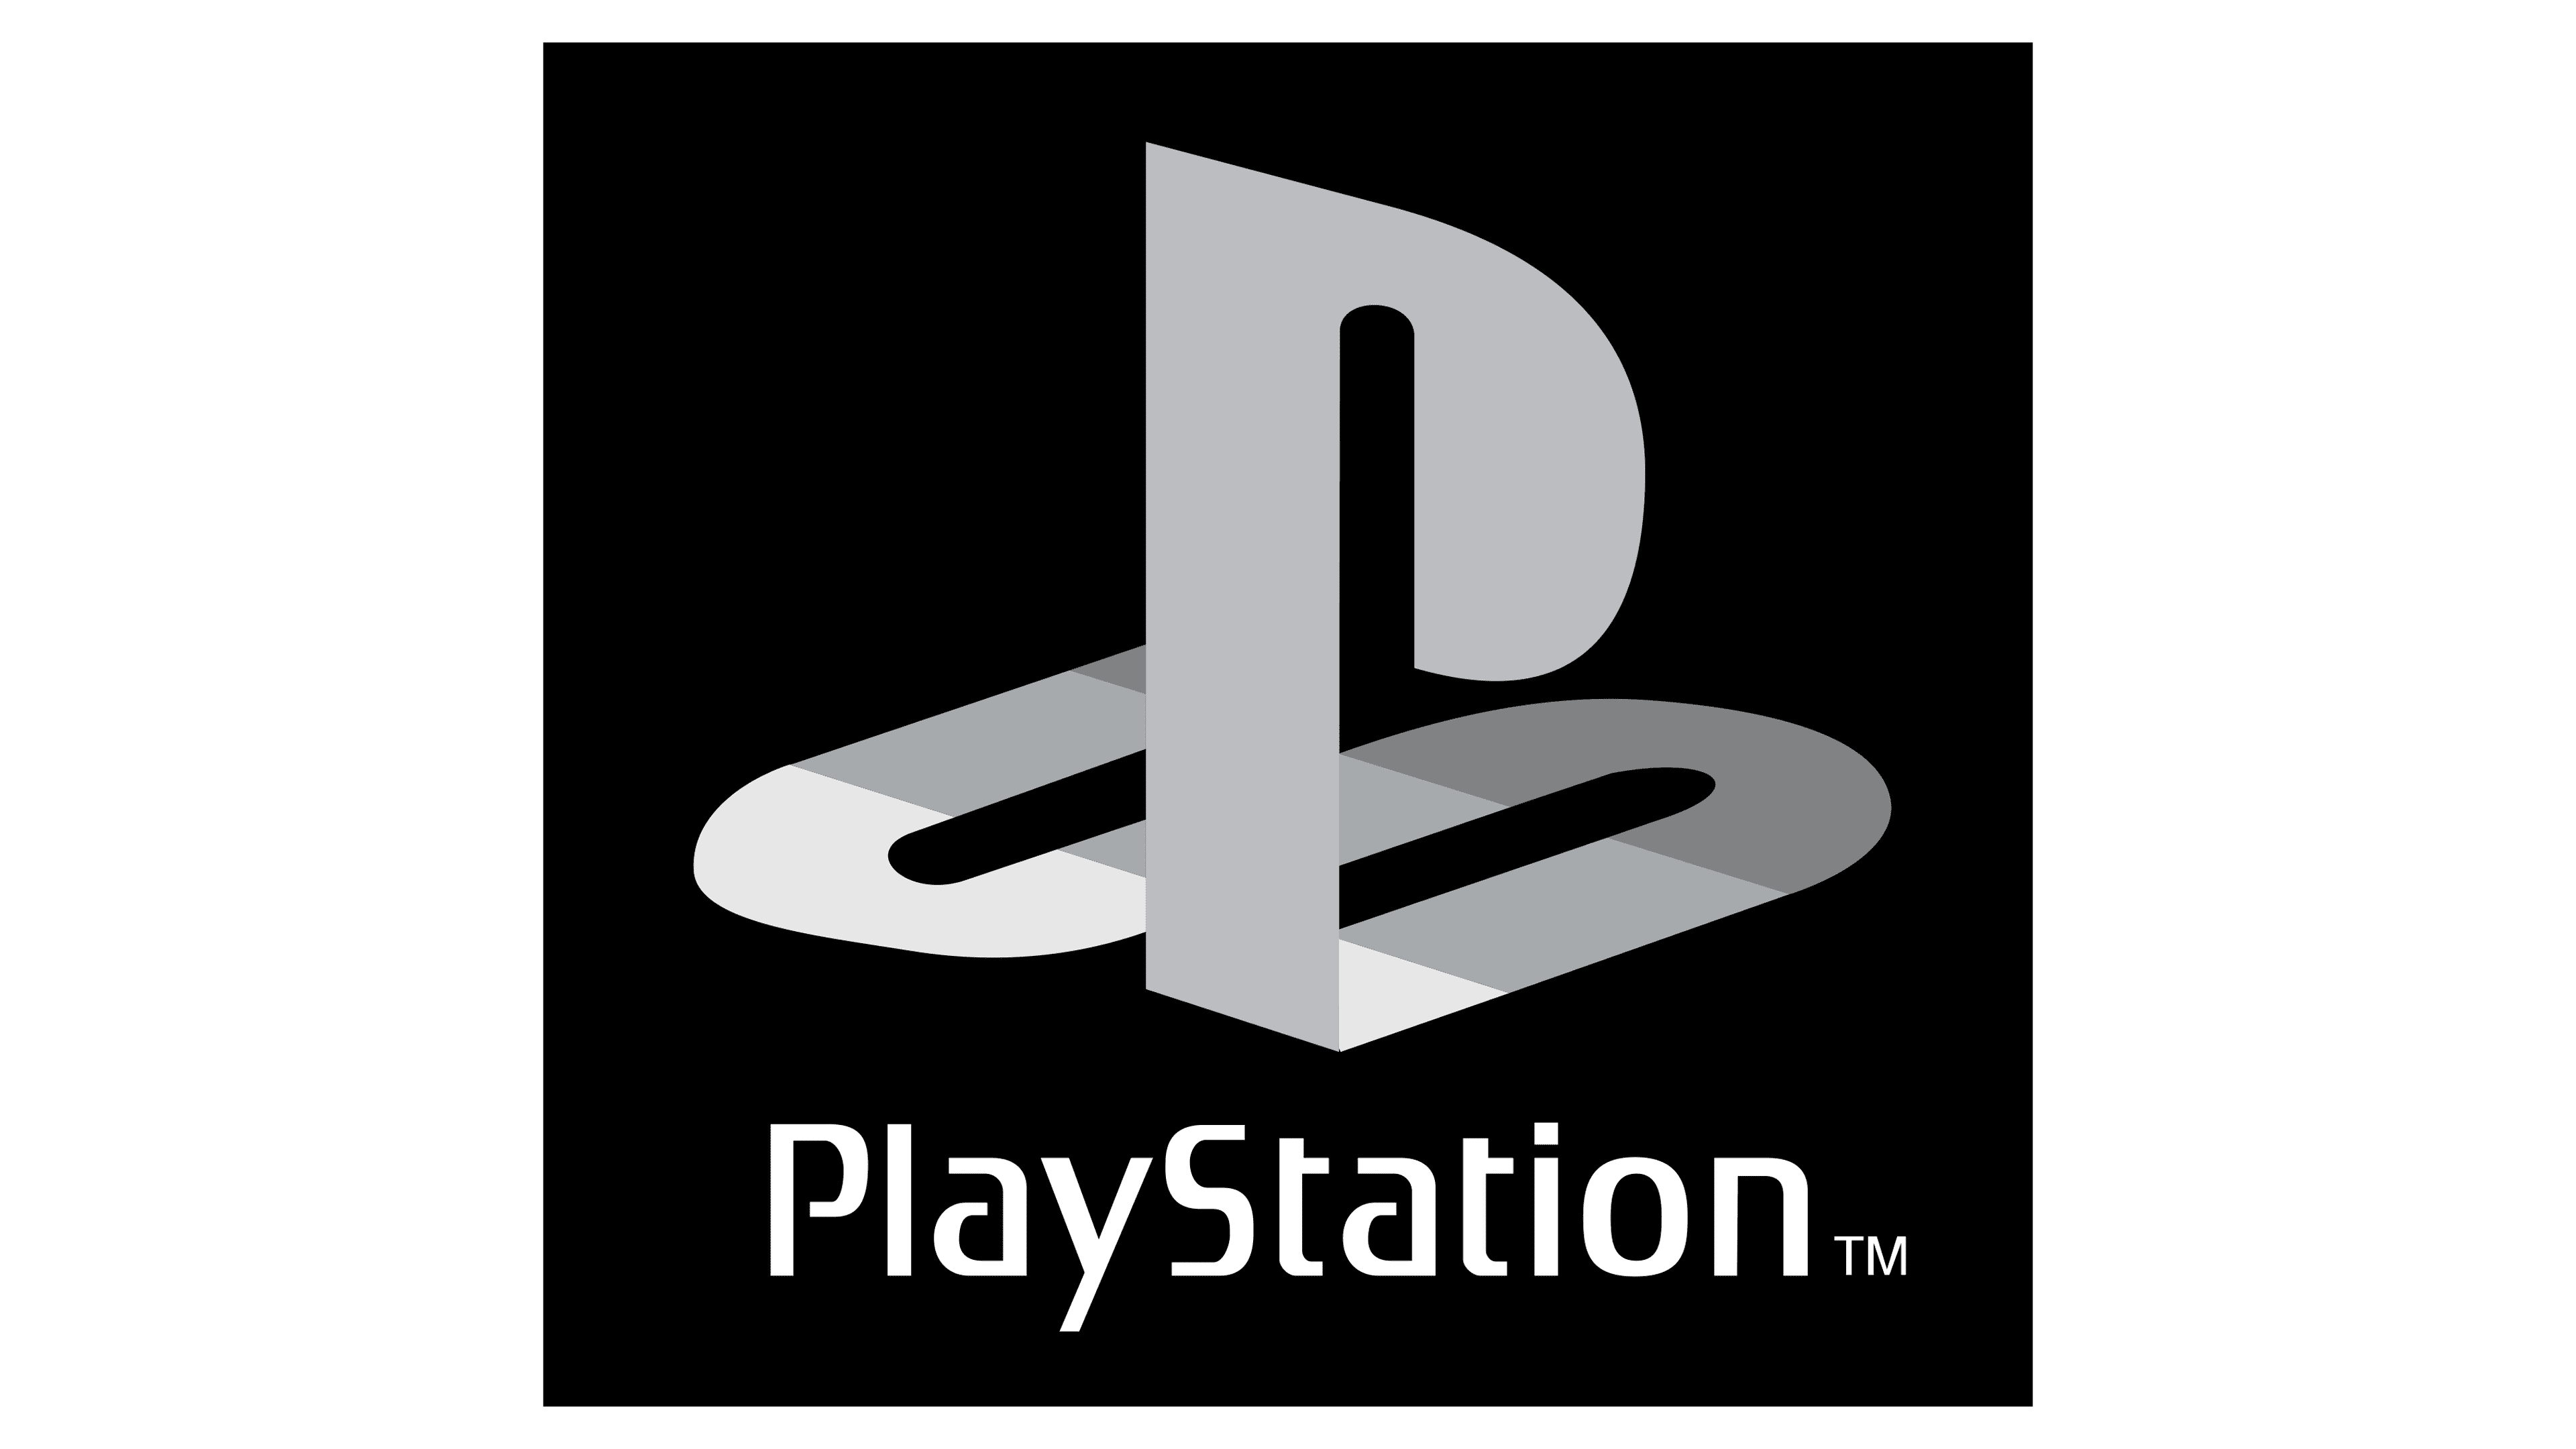 Ps4 компания. Логотип Sony PLAYSTATION 1. Sony PLAYSTATION 4 logo. Надпись плейстейшен. Sony PLAYSTATION надпись.